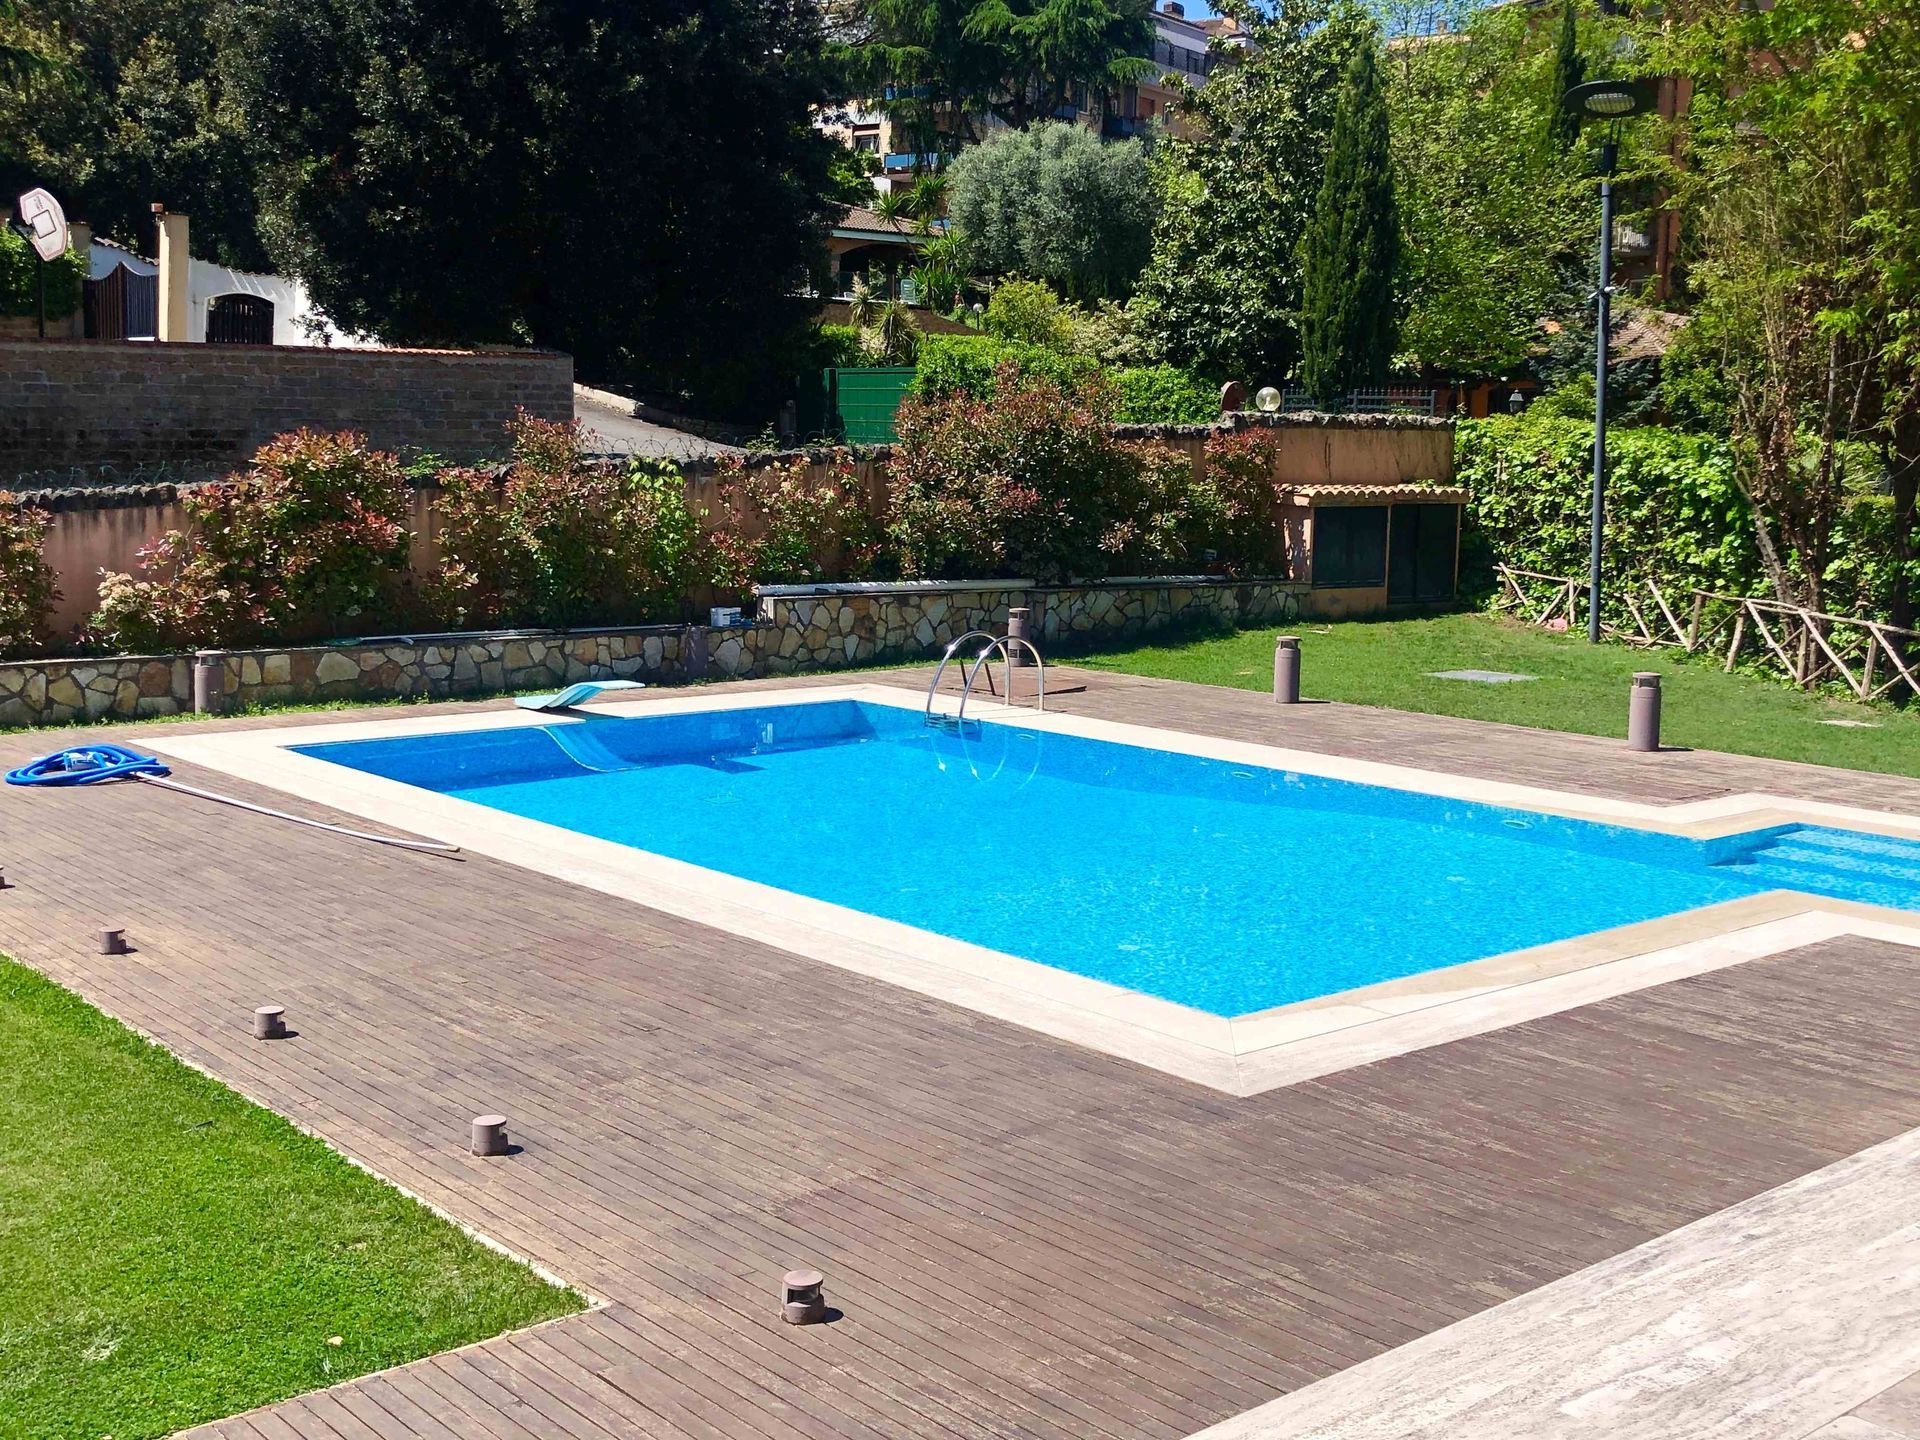 A rectangle pool in a backyard